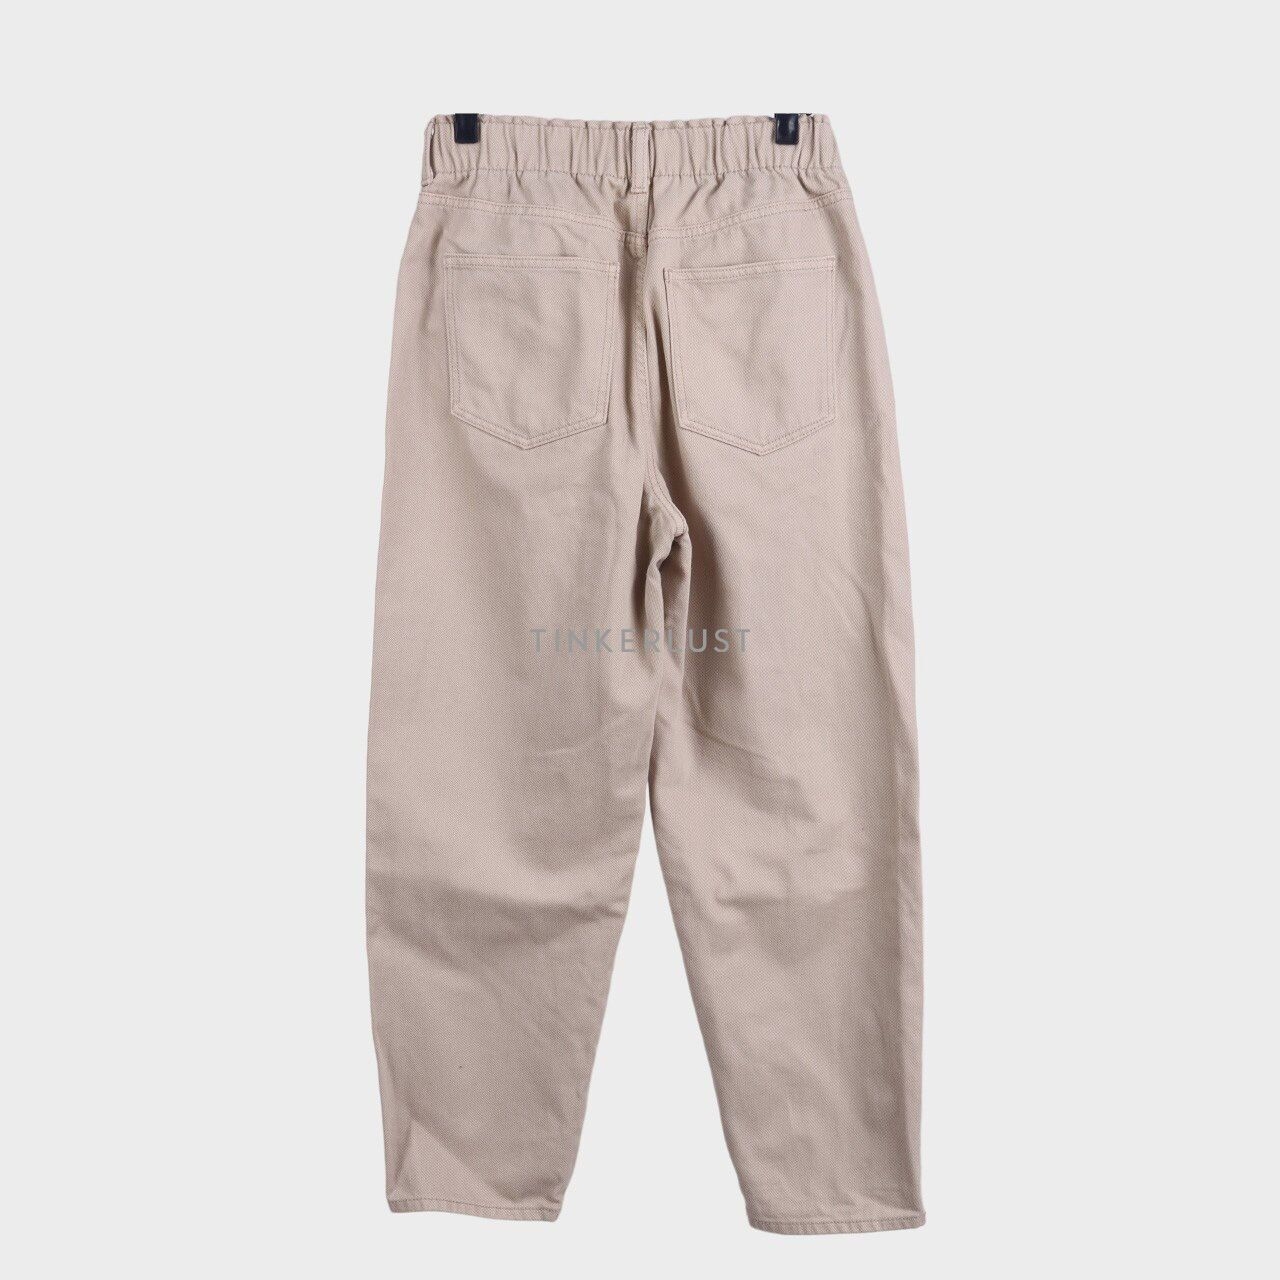 H&M Light Brown Long Pants